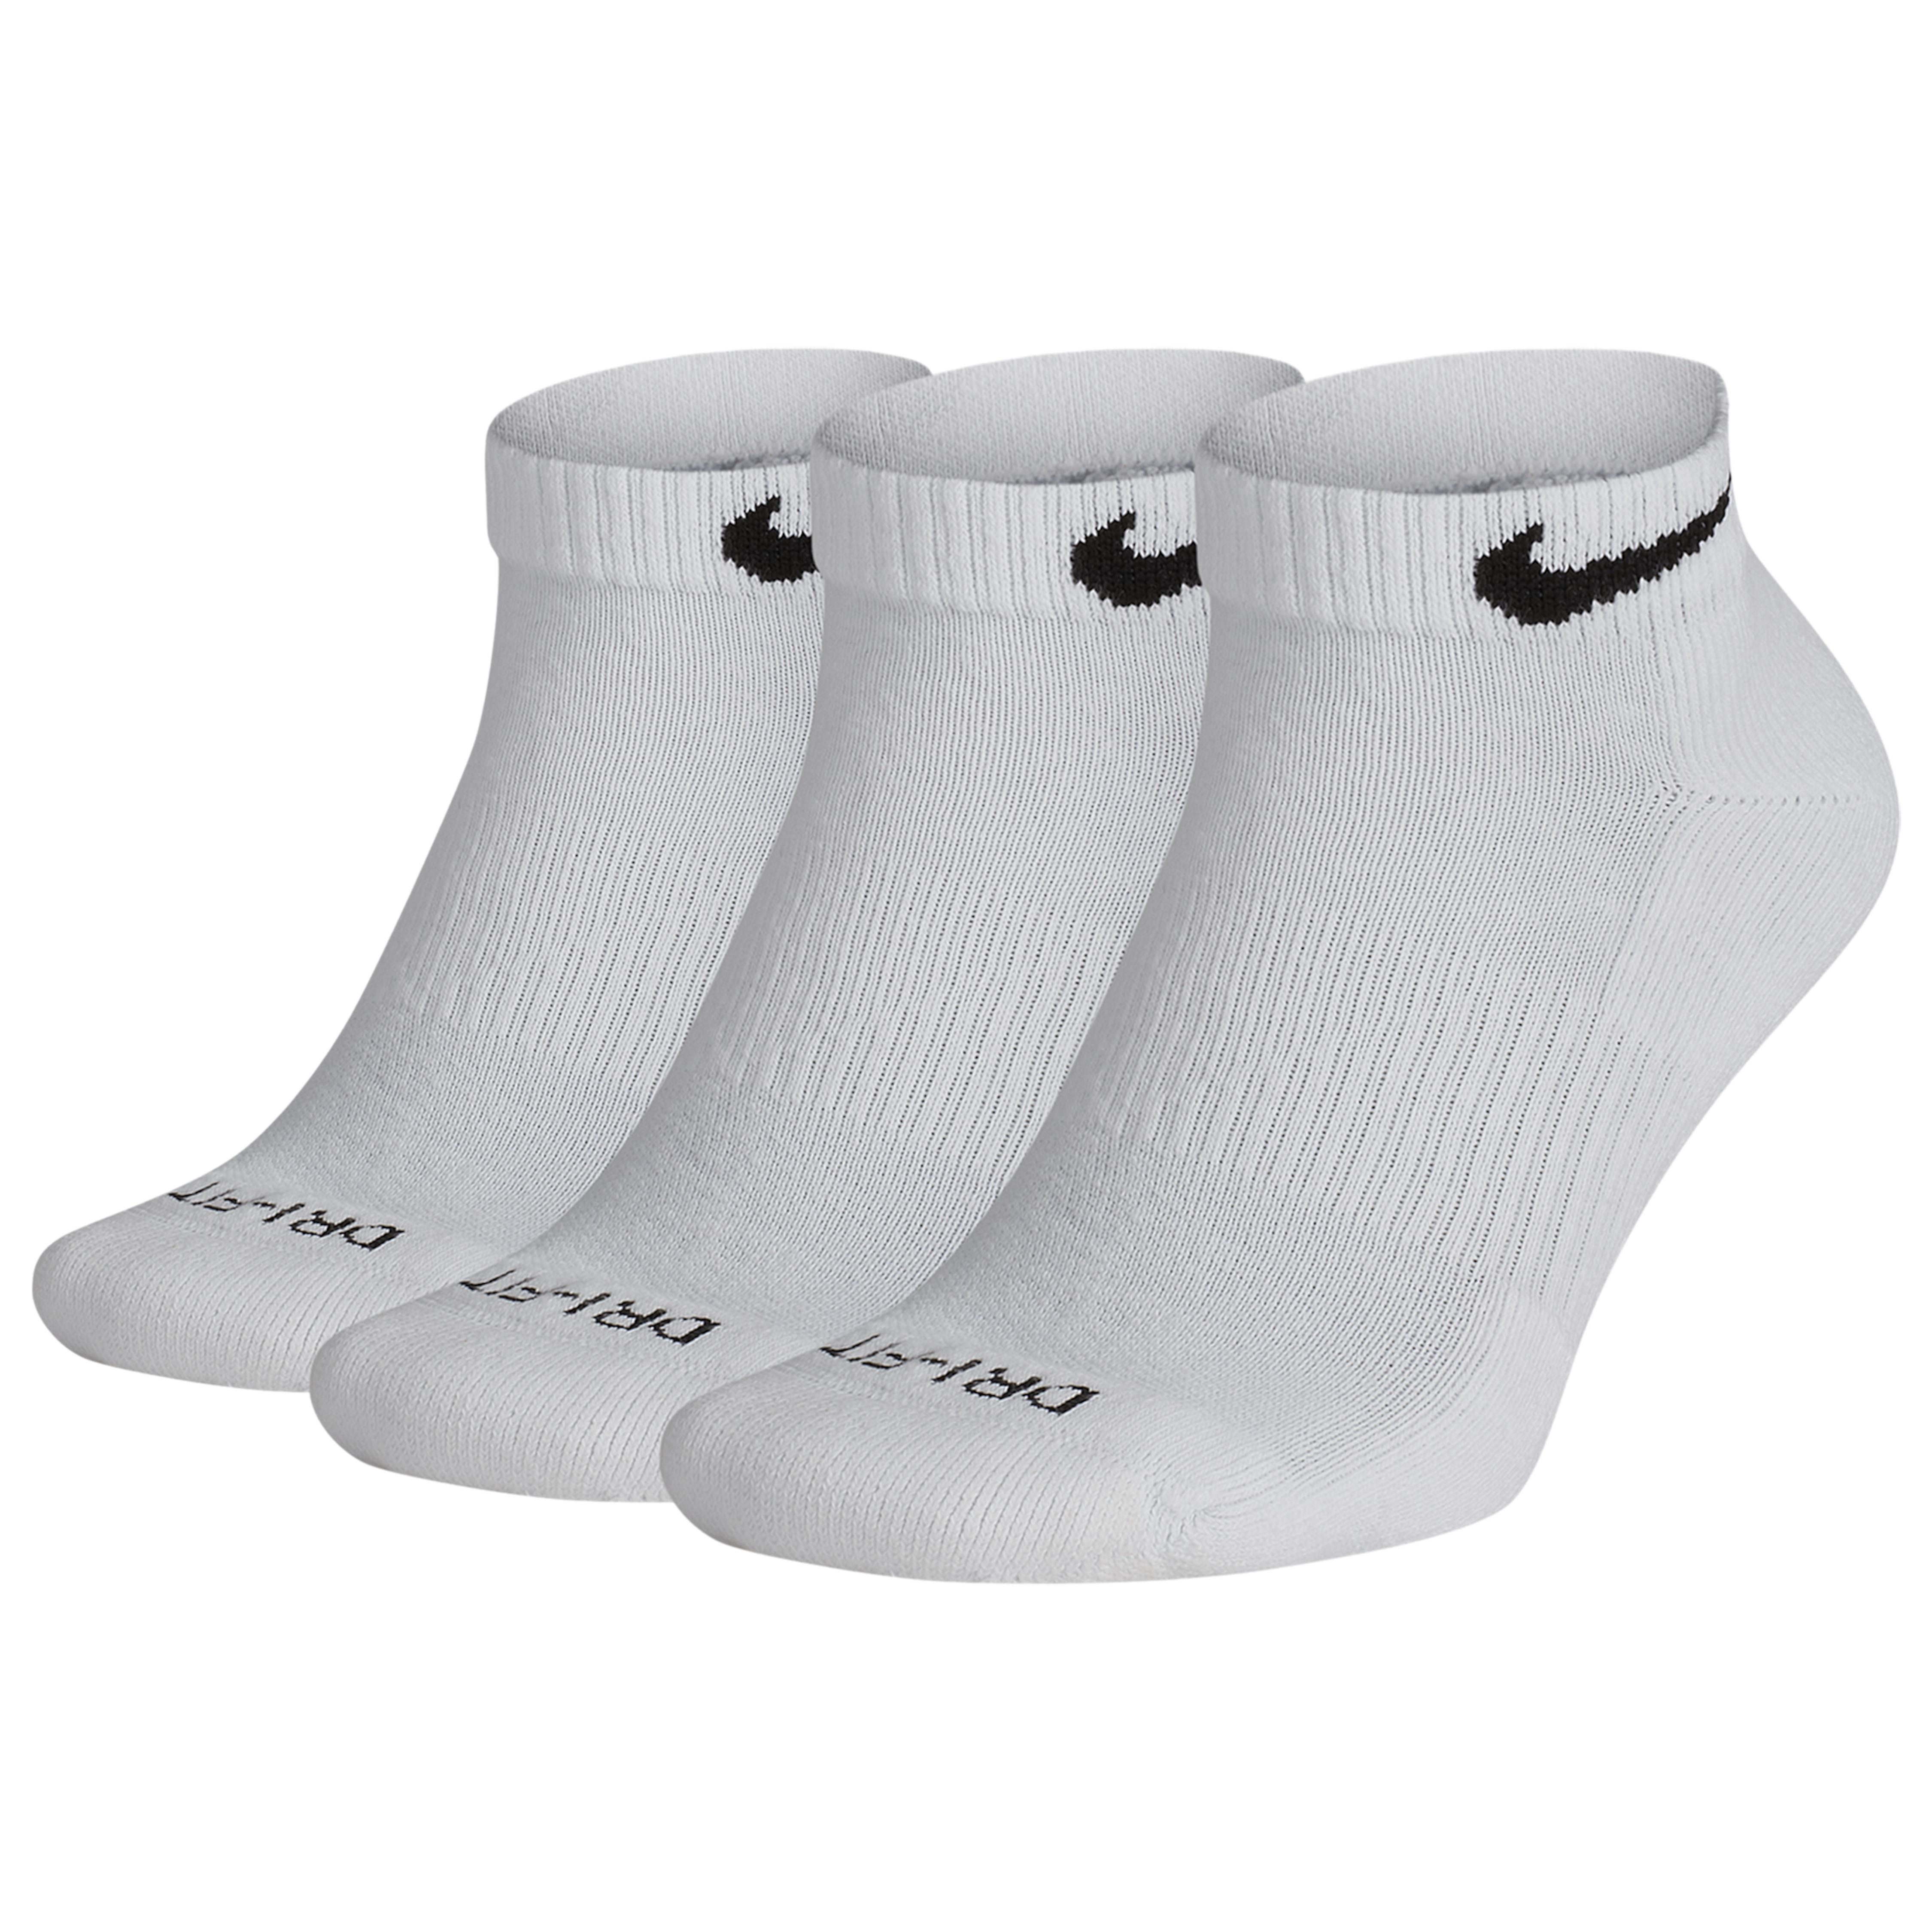 Nike Cotton 3 Pack Dri-fit Plus Low Cut Socks in White/Black (White ...